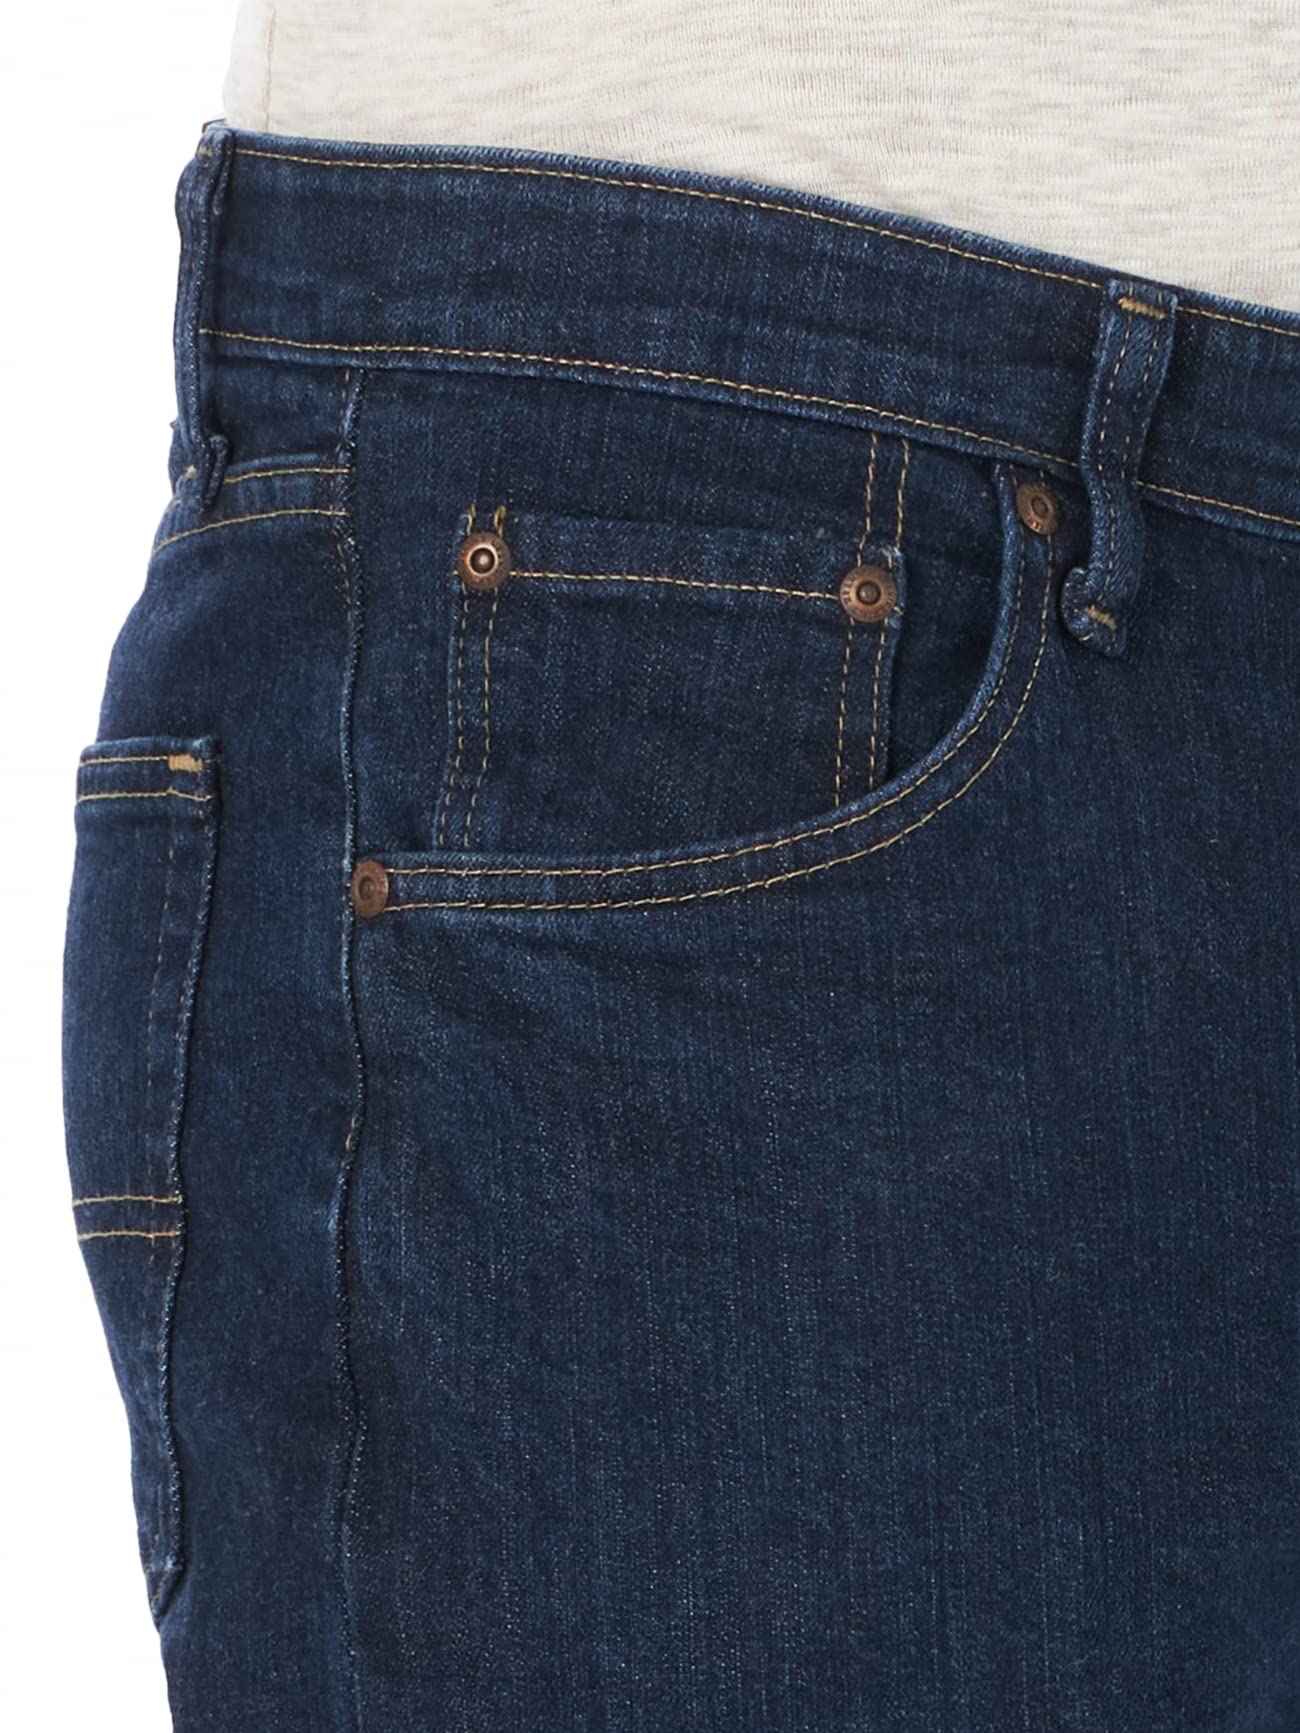 Wrangler Authentics Men's Regular Fit Comfort Flex Waist Jean, Dark Indigo, 38W x 29L